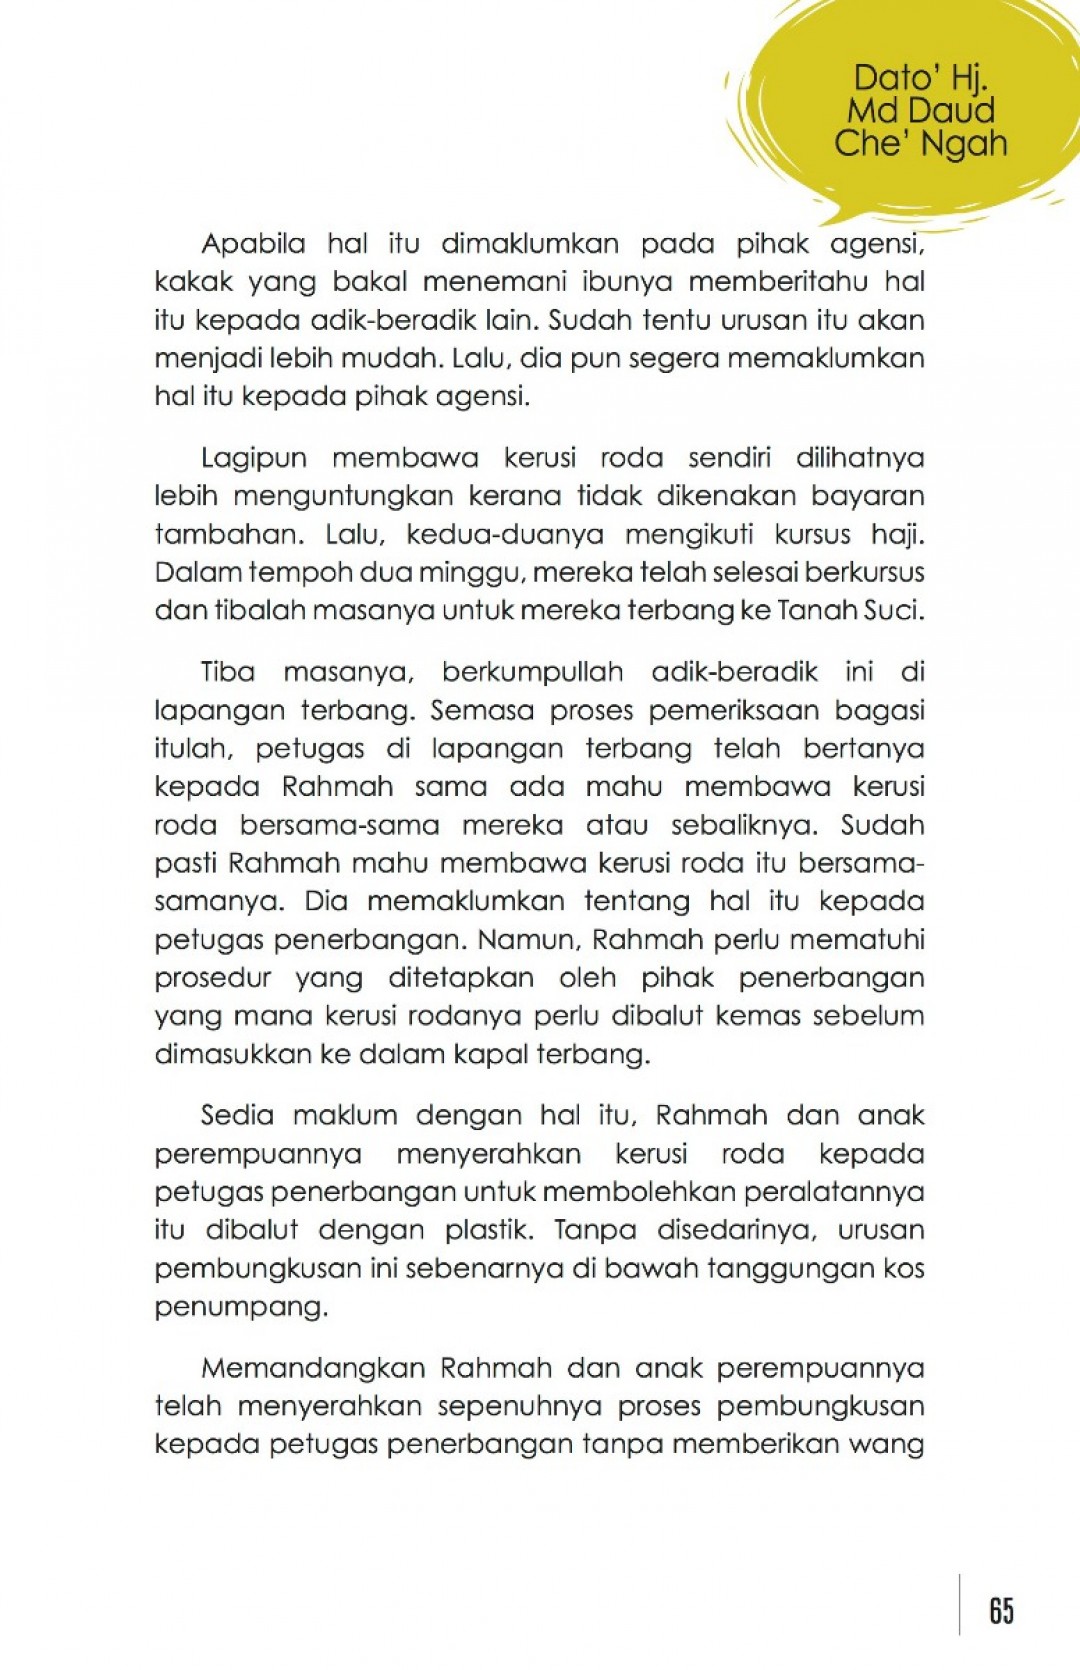 Cerita Daripada Mutawif - Dato' Hj. Md Daud Che' Ngah